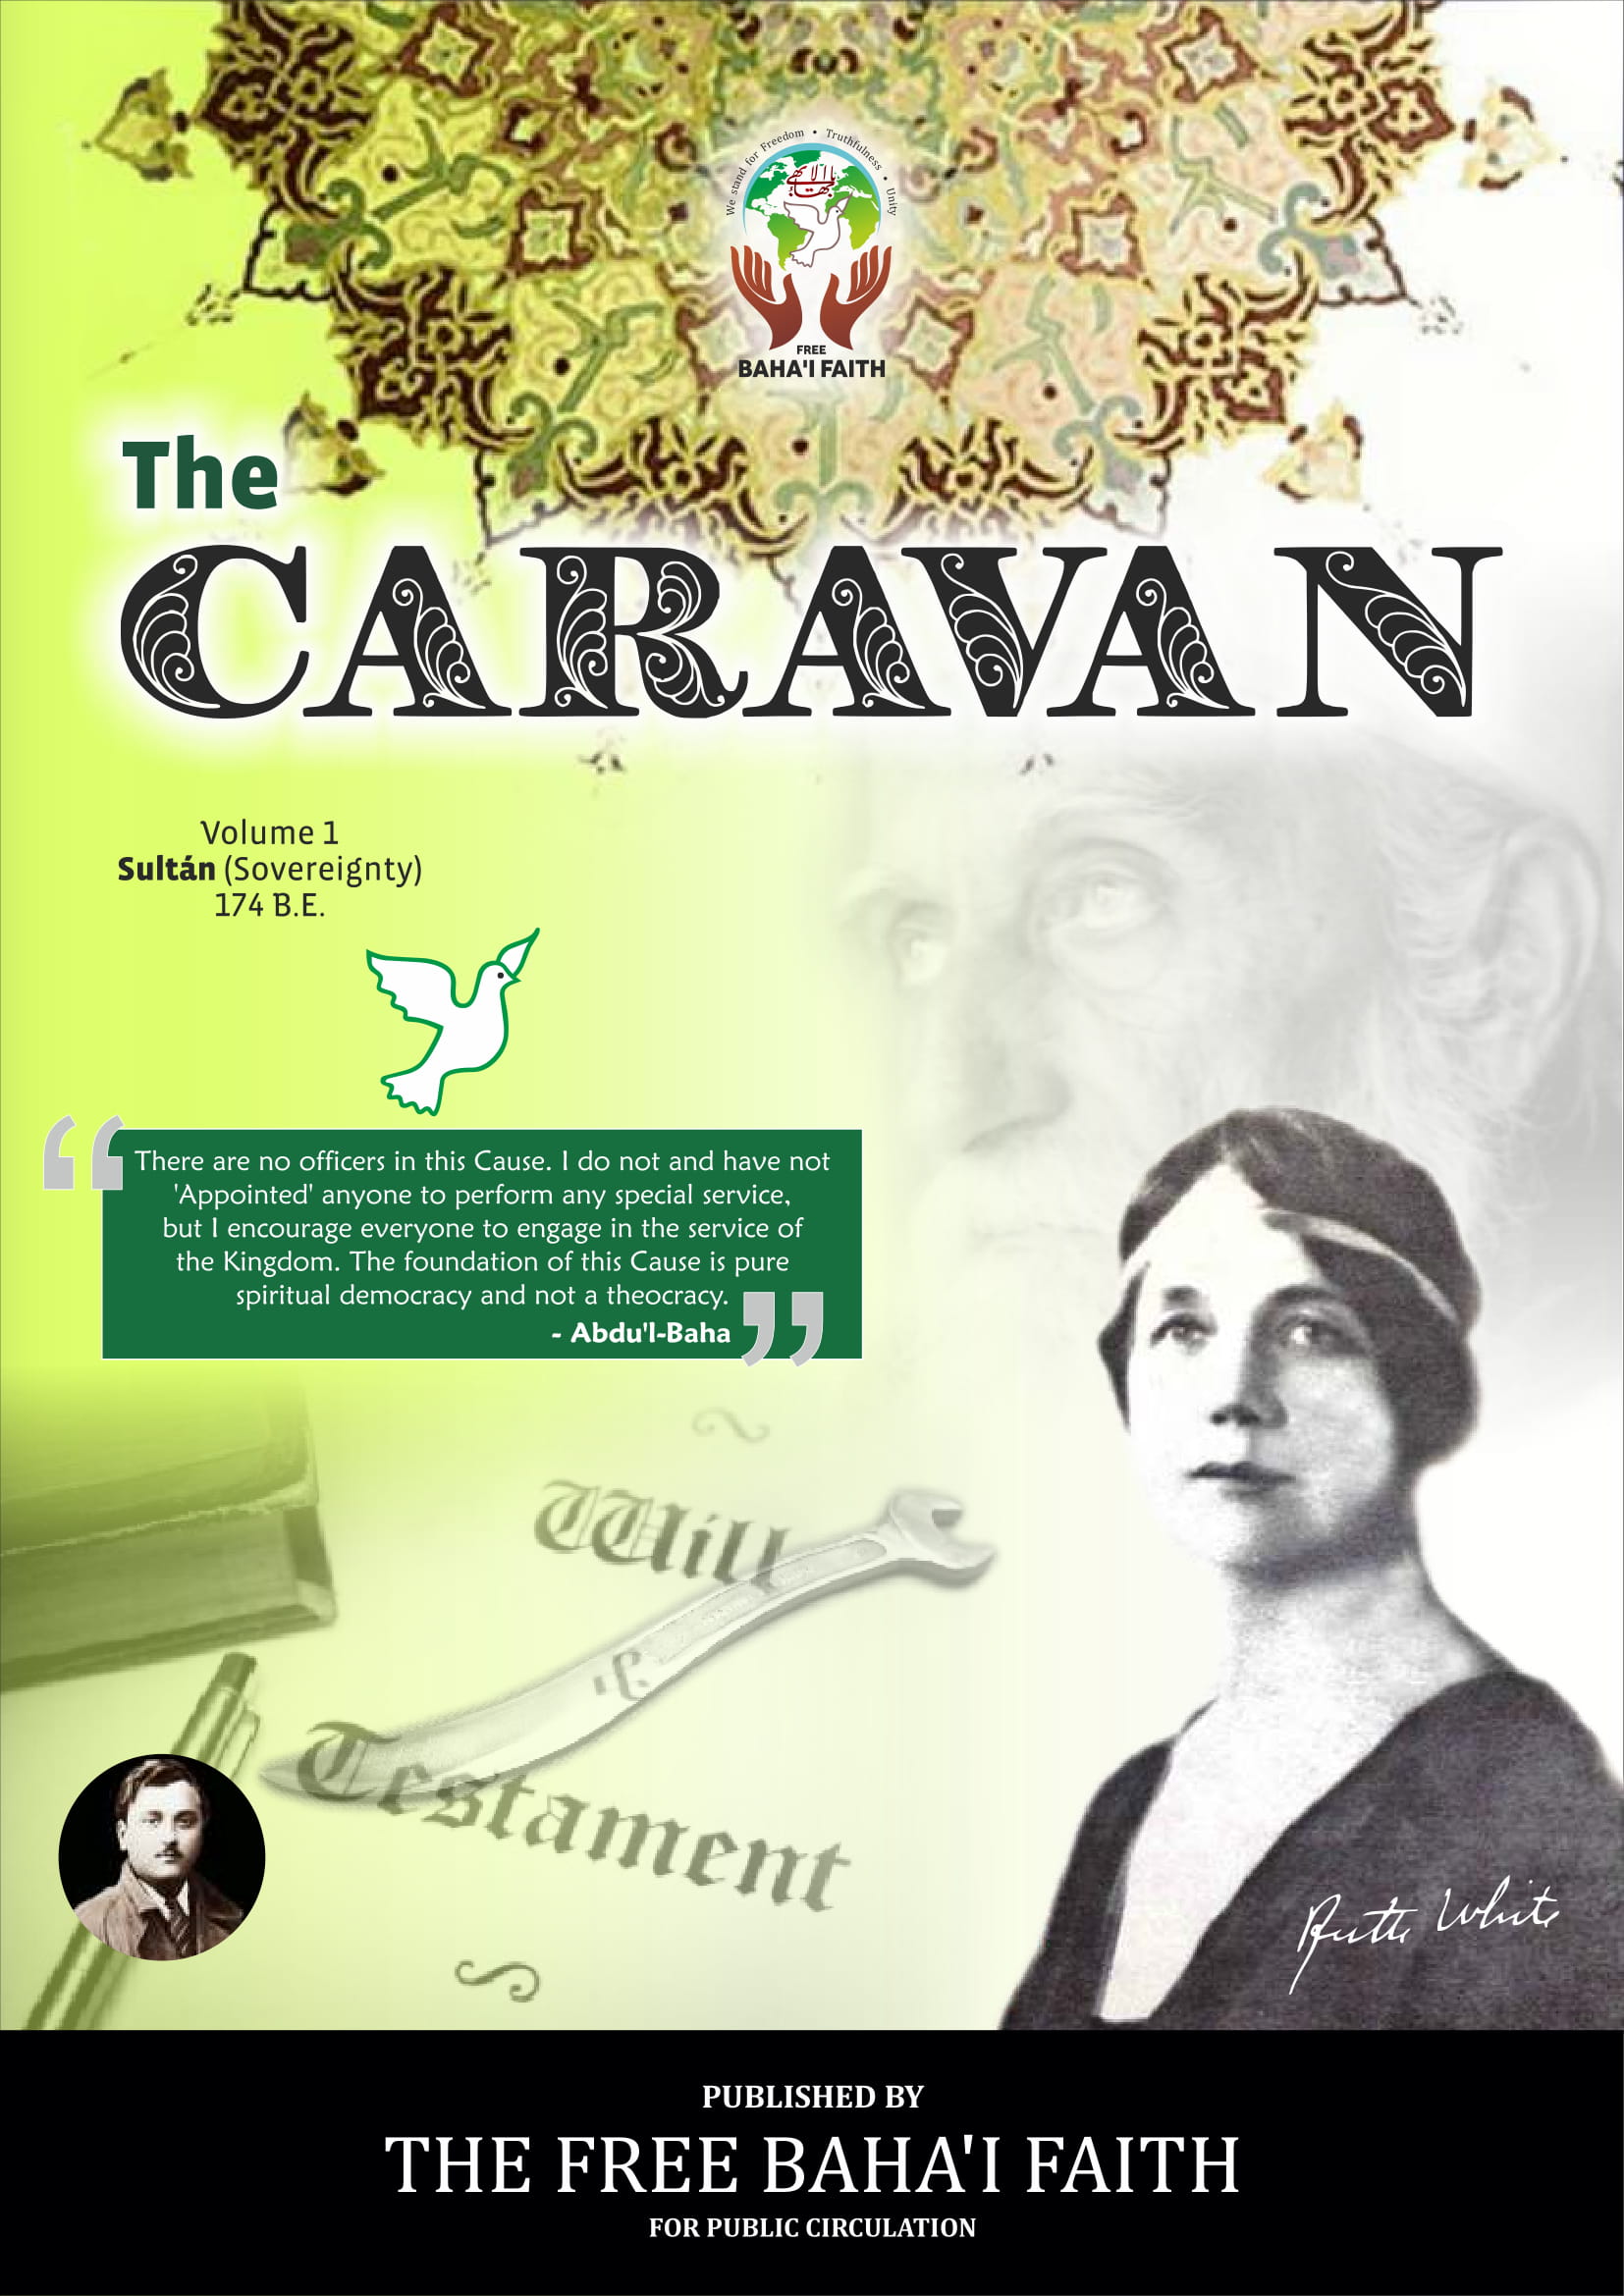 The Caravan, Volume 1, Edition 1